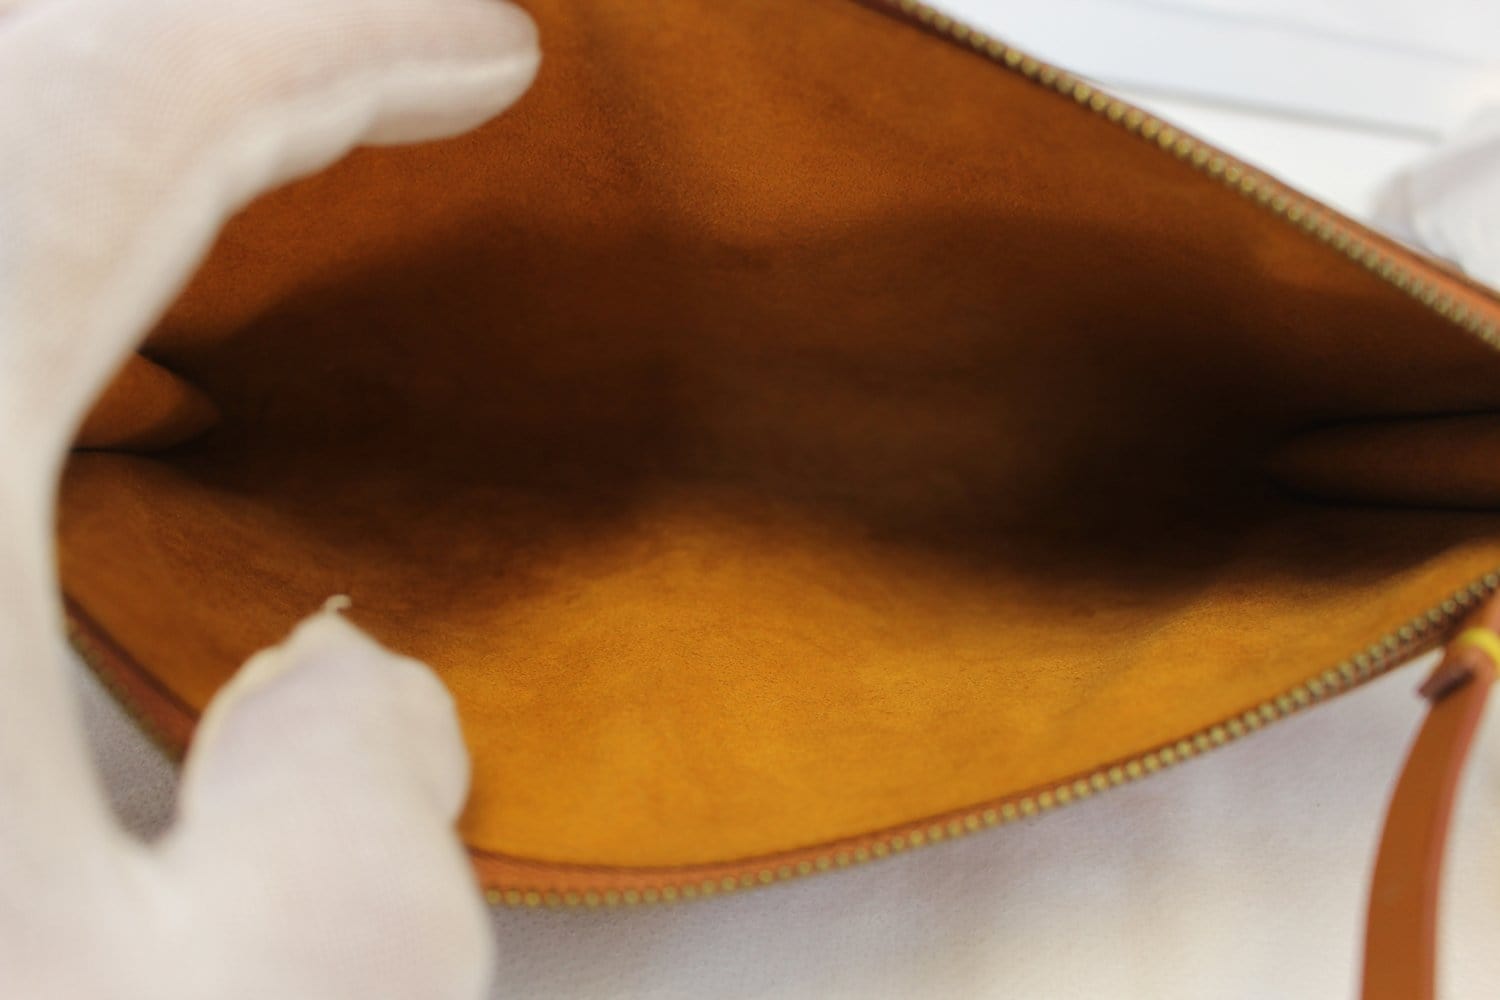 Louis Vuitton Vintage - Epi Pochette Accessoires Bag - Yellow - Leather and  Epi Leather Handbag - Luxury High Quality